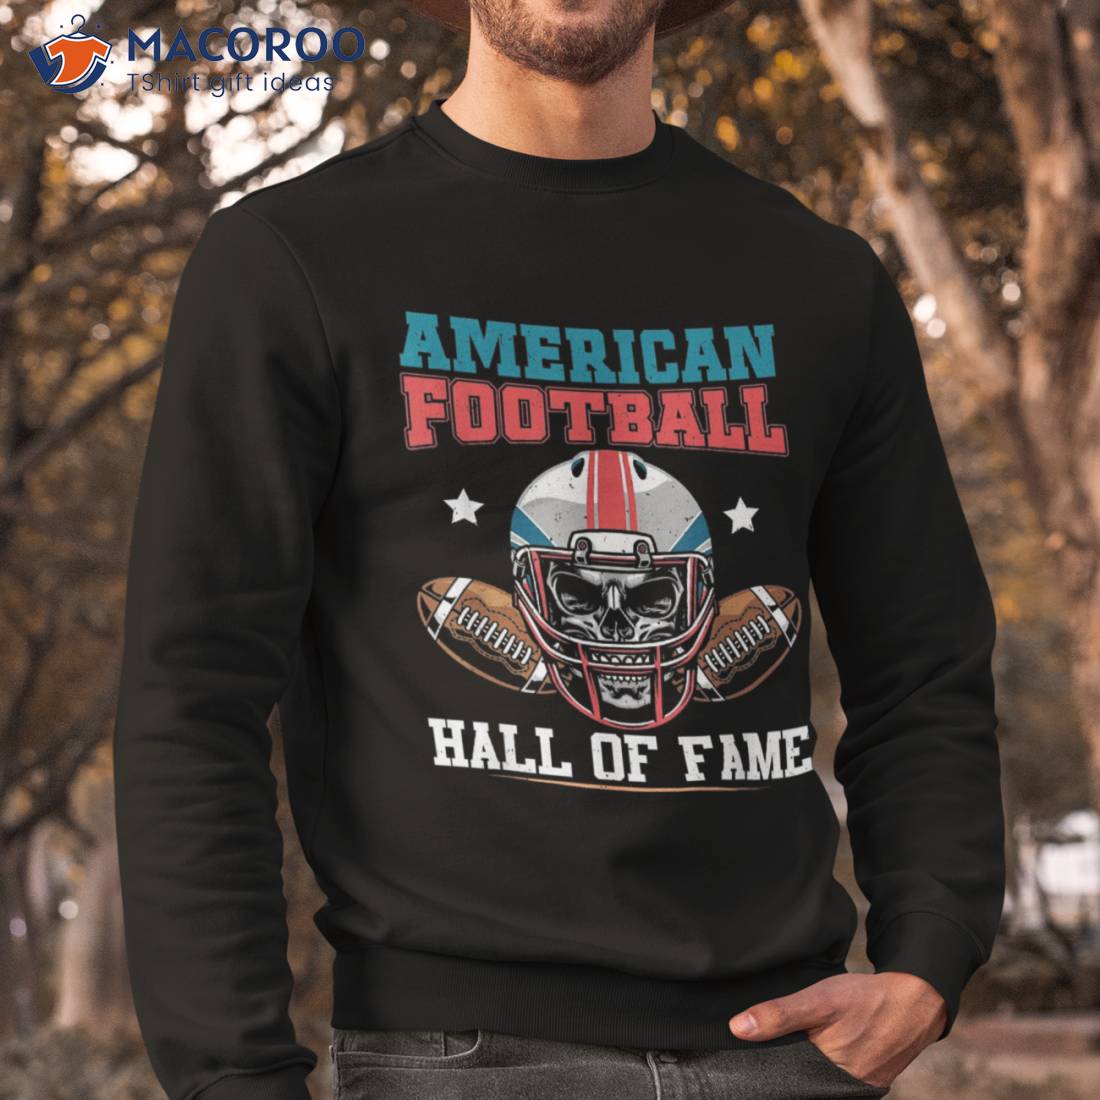 american football sweatshirt